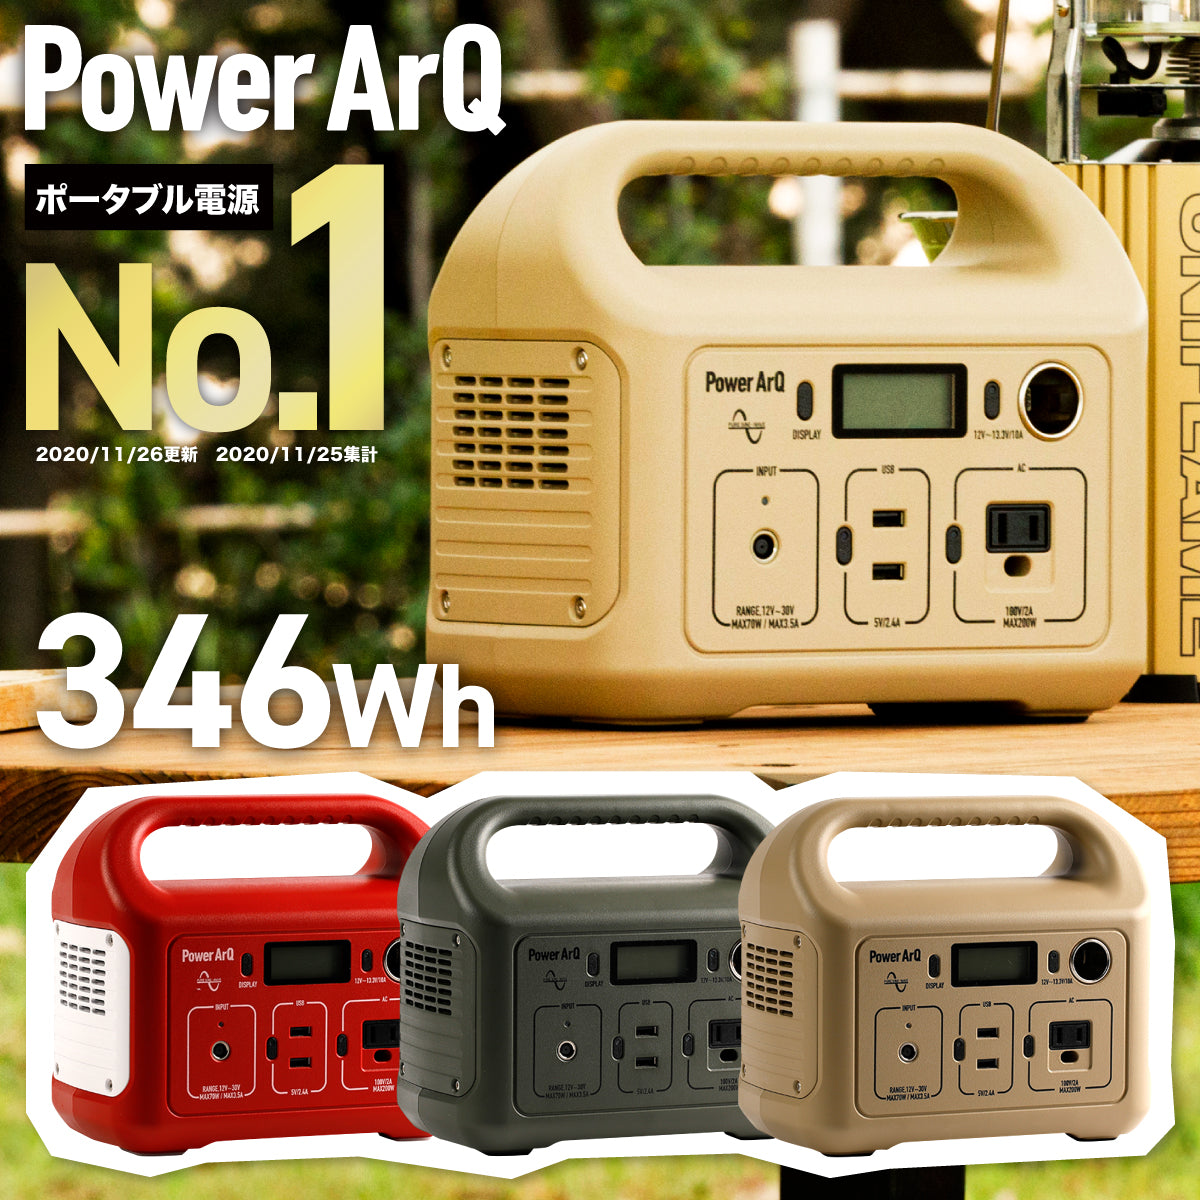 Power ArQ smart tap mini 346wh-